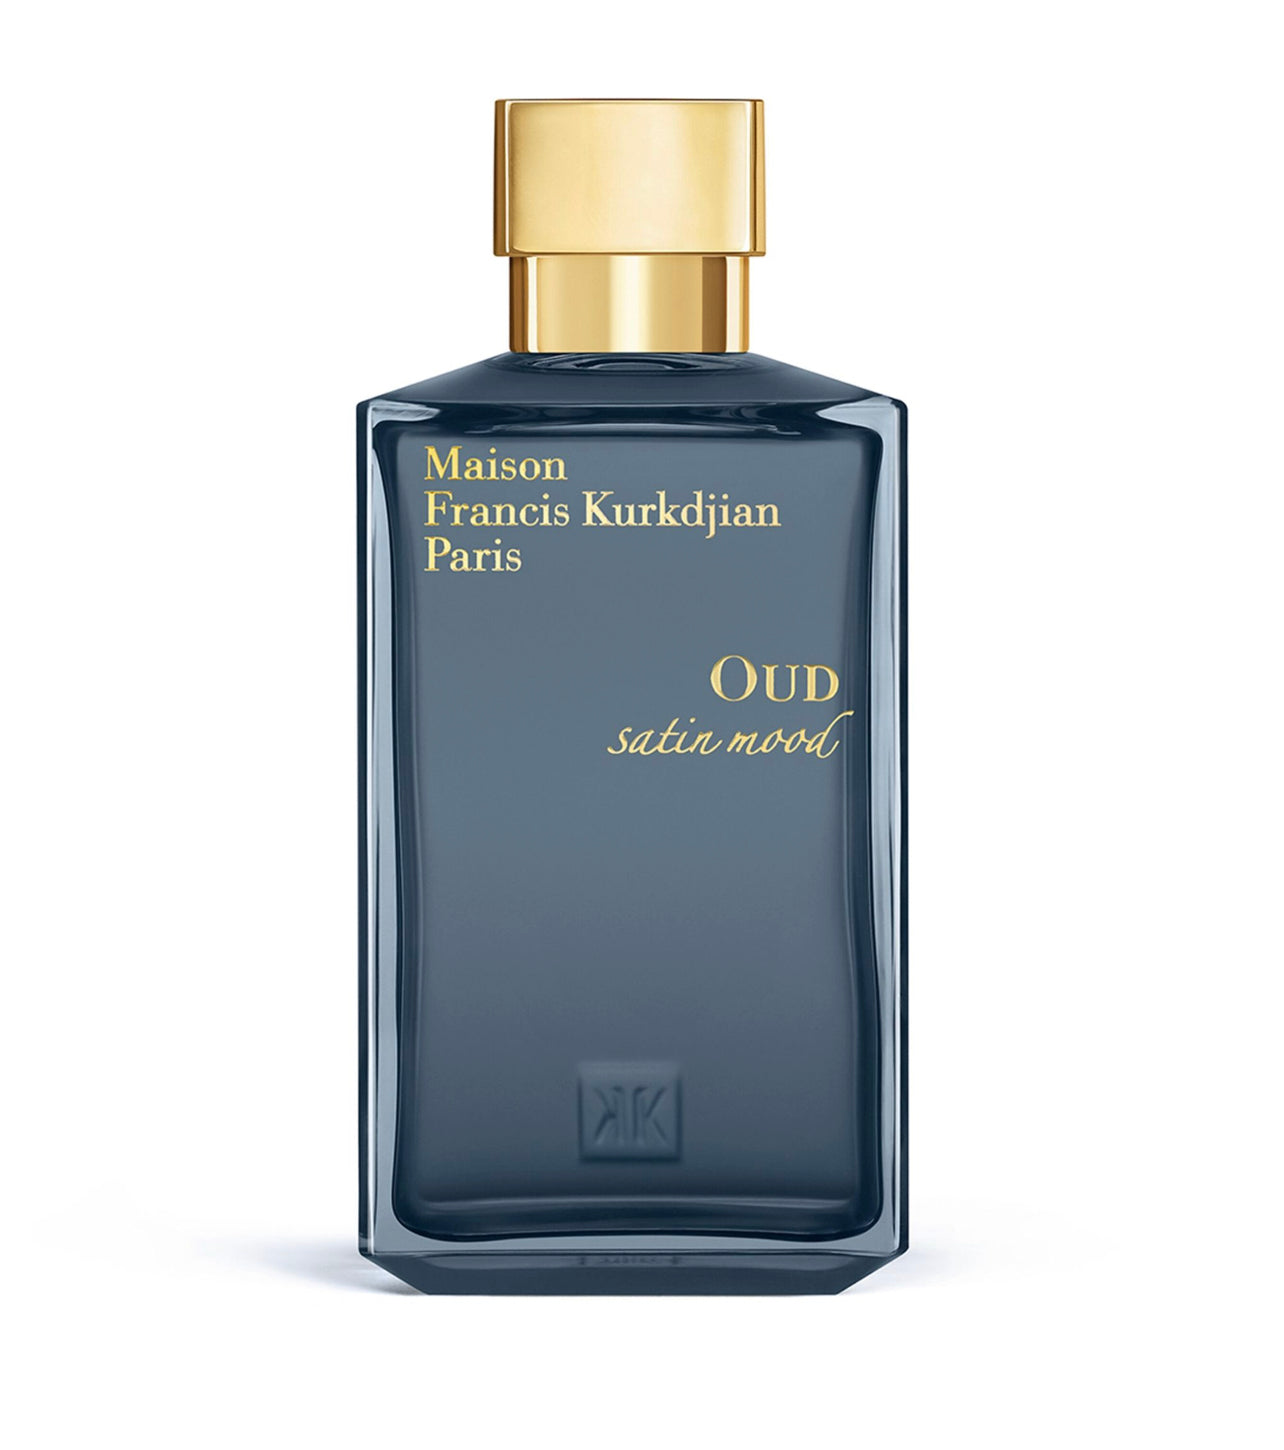 Maison Francis Kurkdjian Oud Satin Mood Eau De Parfum Samples